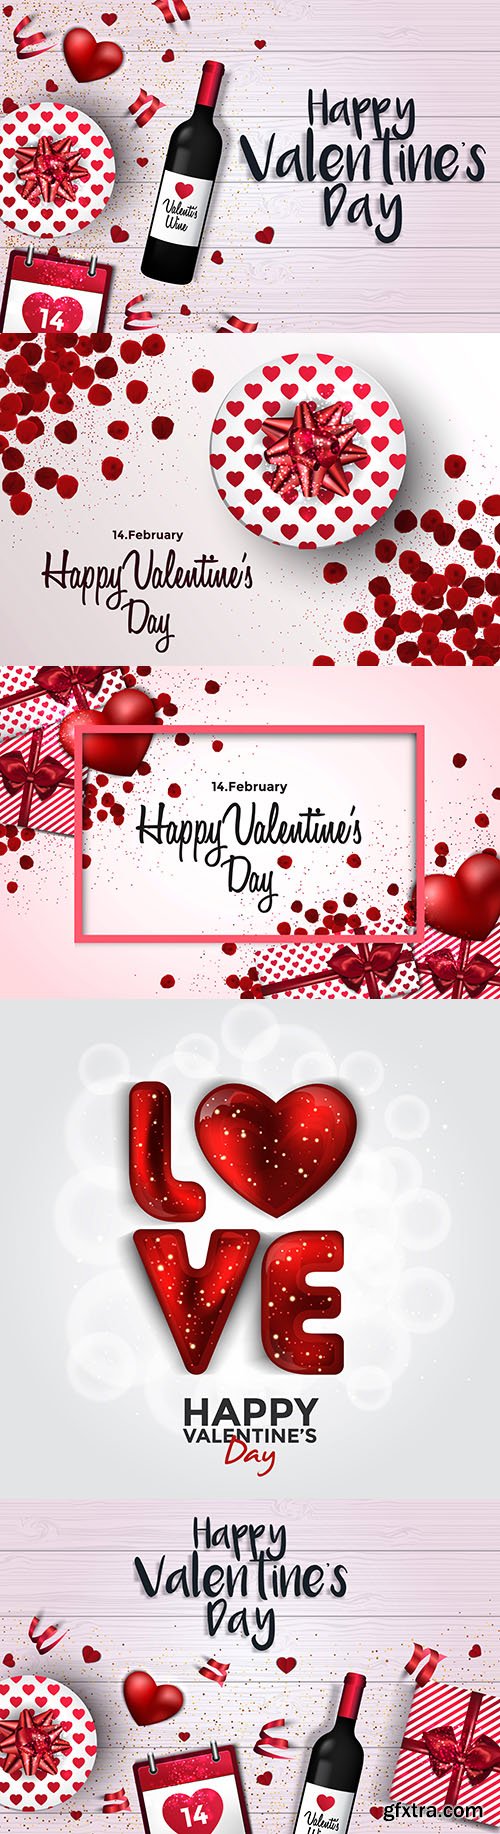 Happy Valentine\'s Day romantic vintage illustrations 46